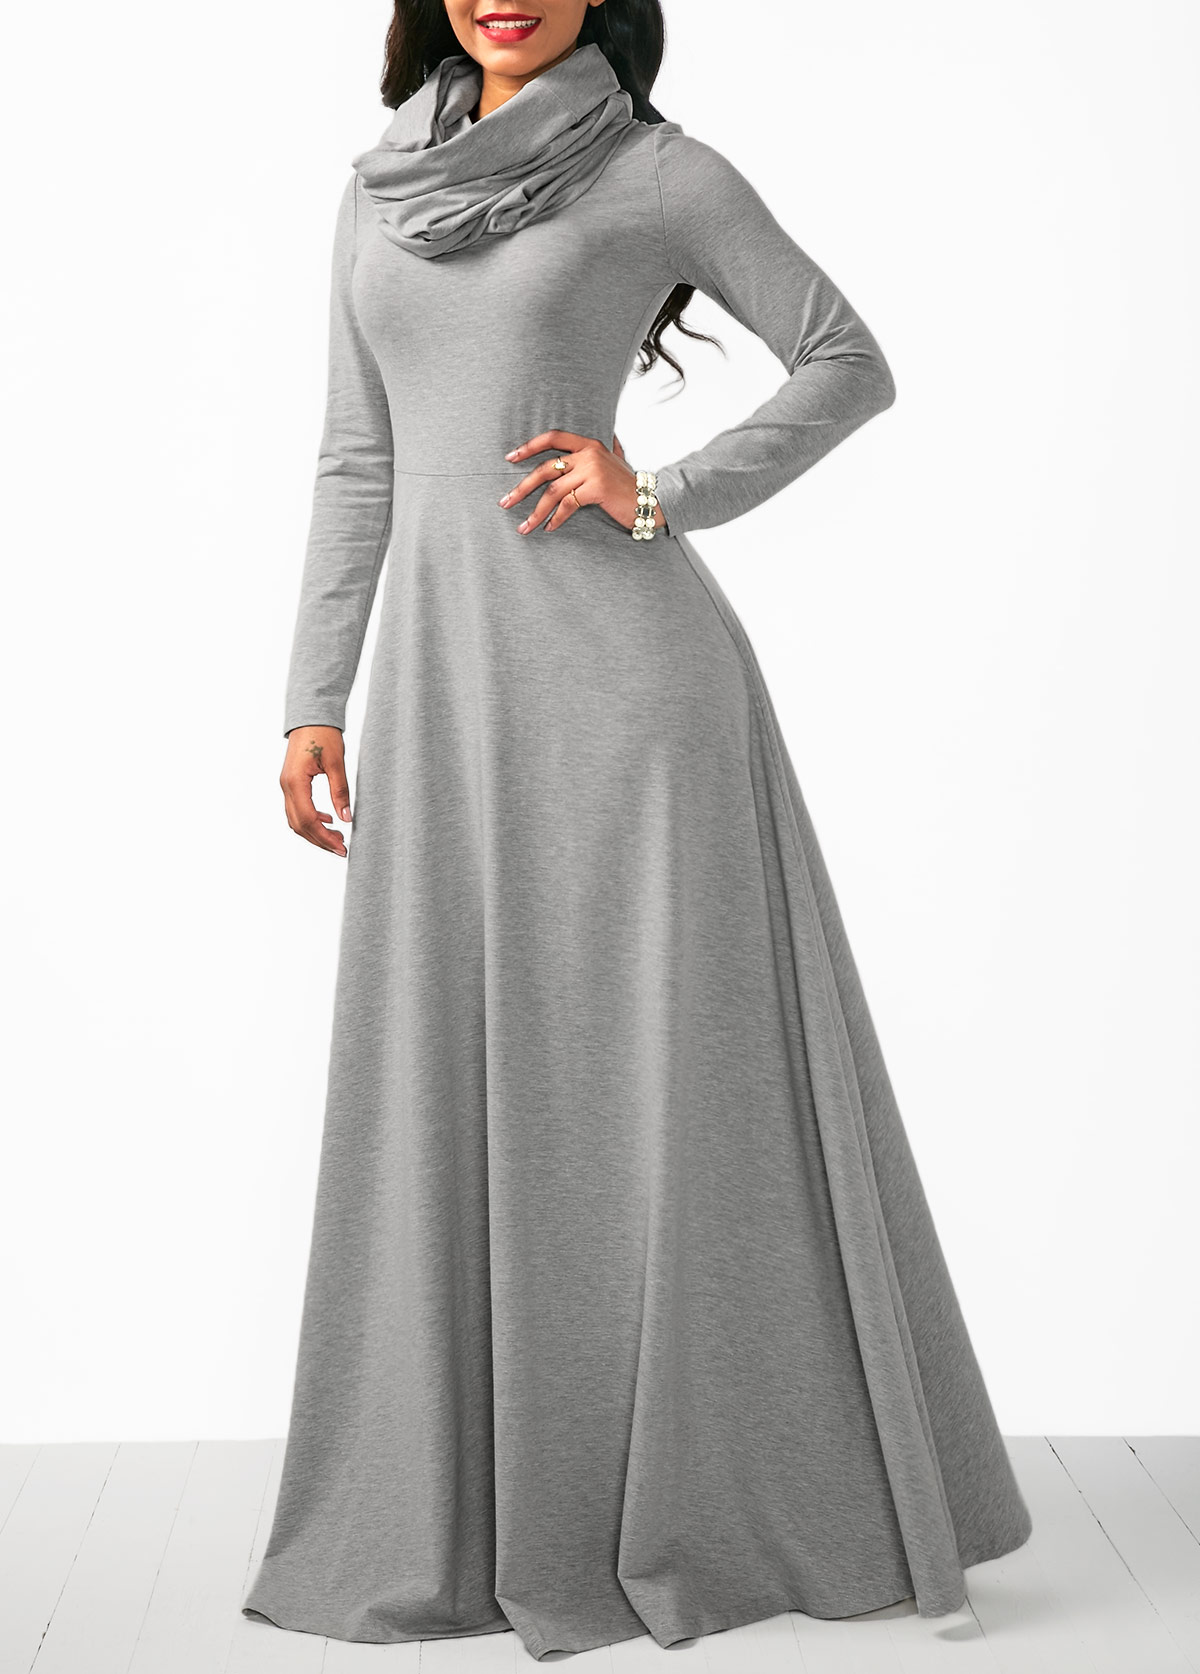 Cowl Neck Long Sleeve Grey Maxi Dress - Fashion Design Store